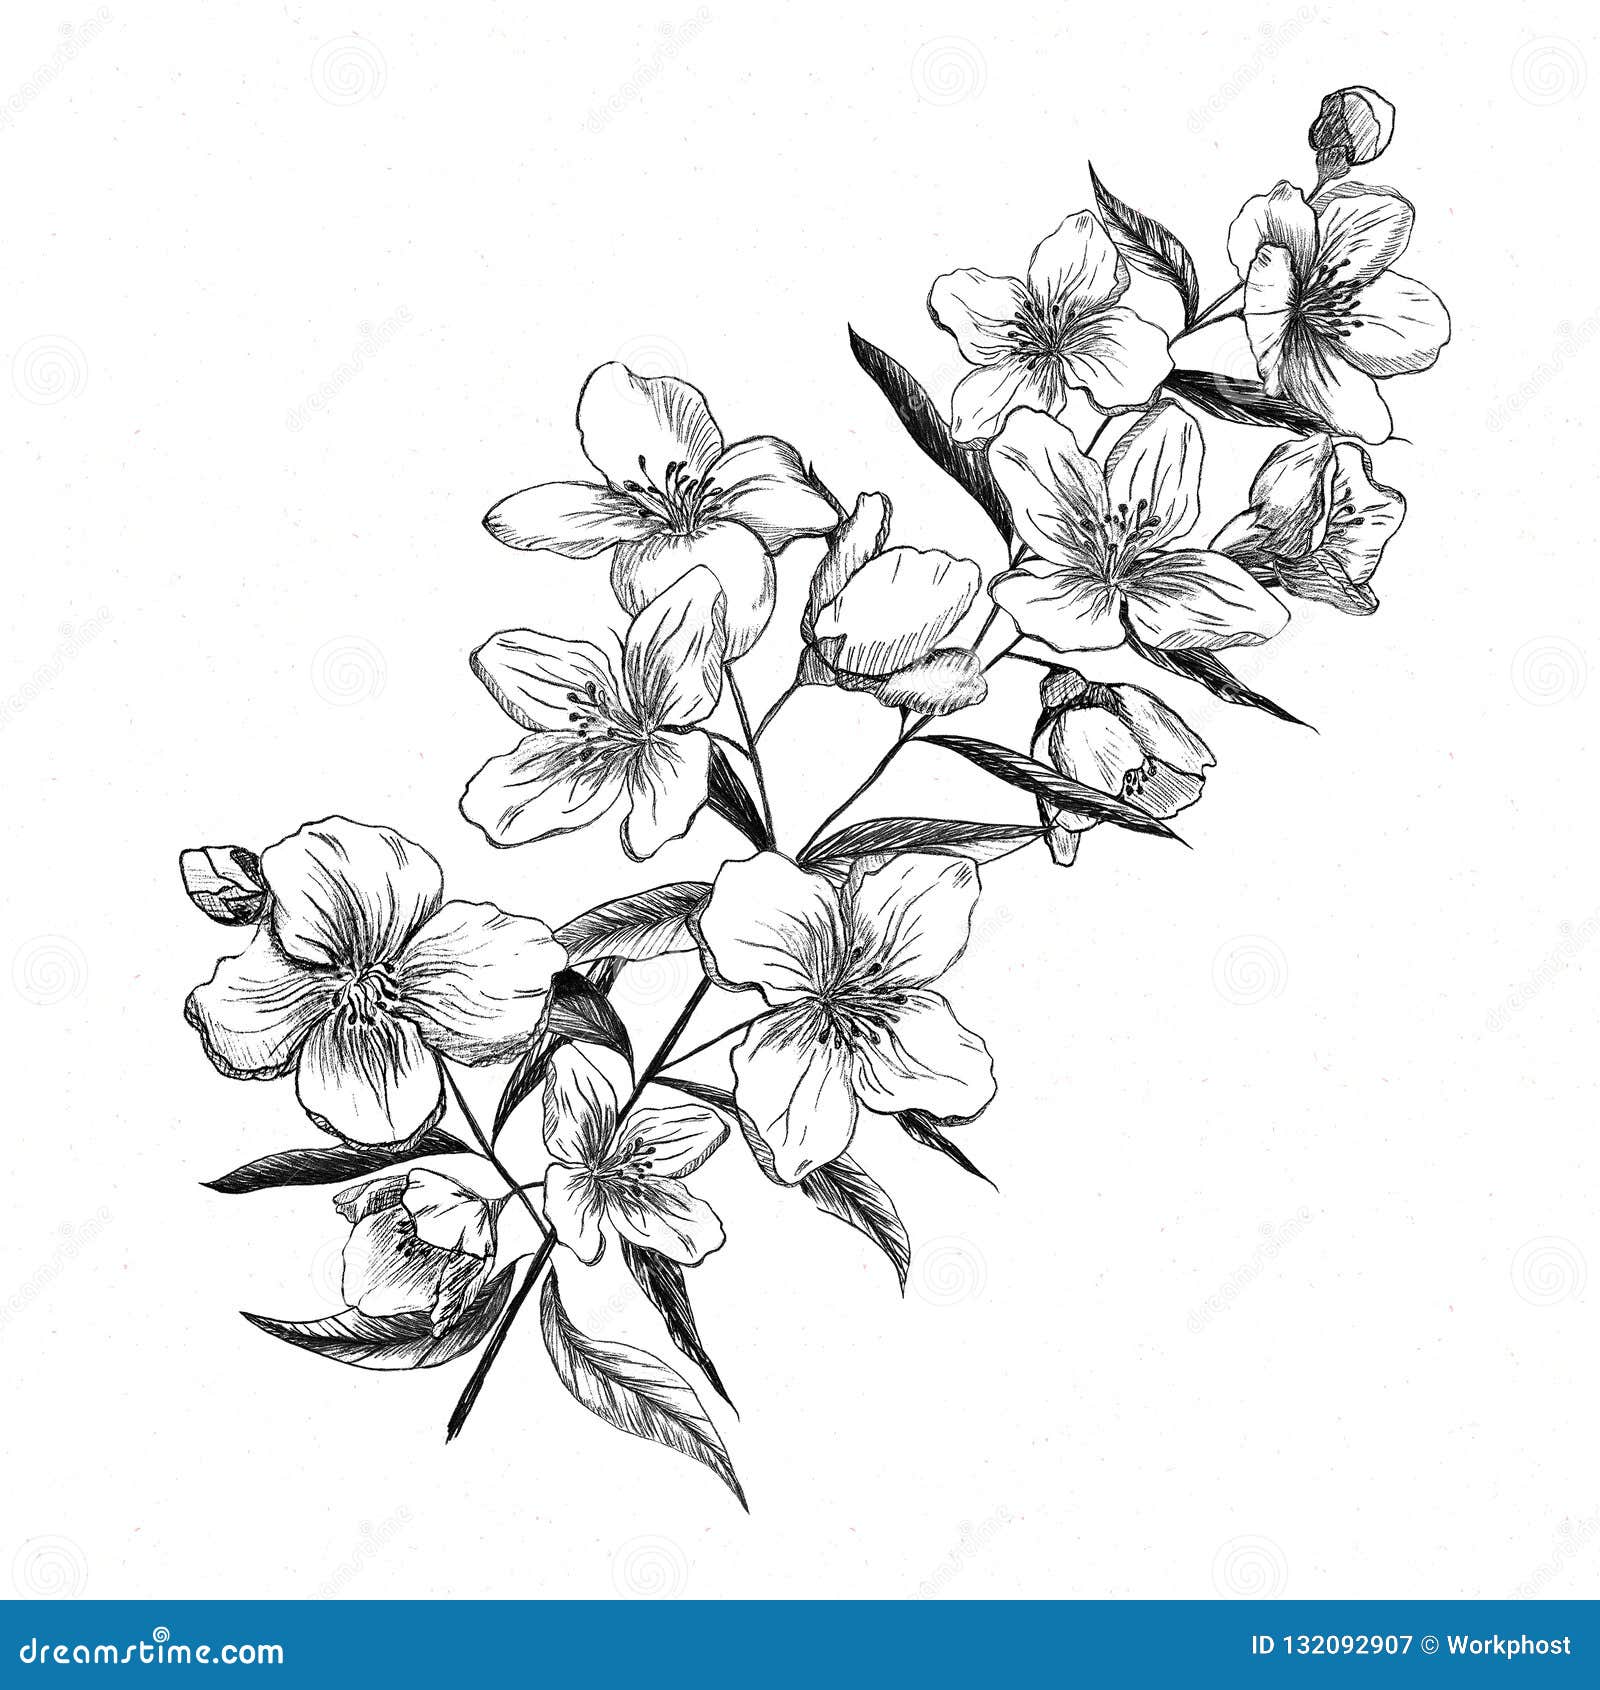 Jasmine Flower Sketch Illustration | Illustrations ~ Creative Market